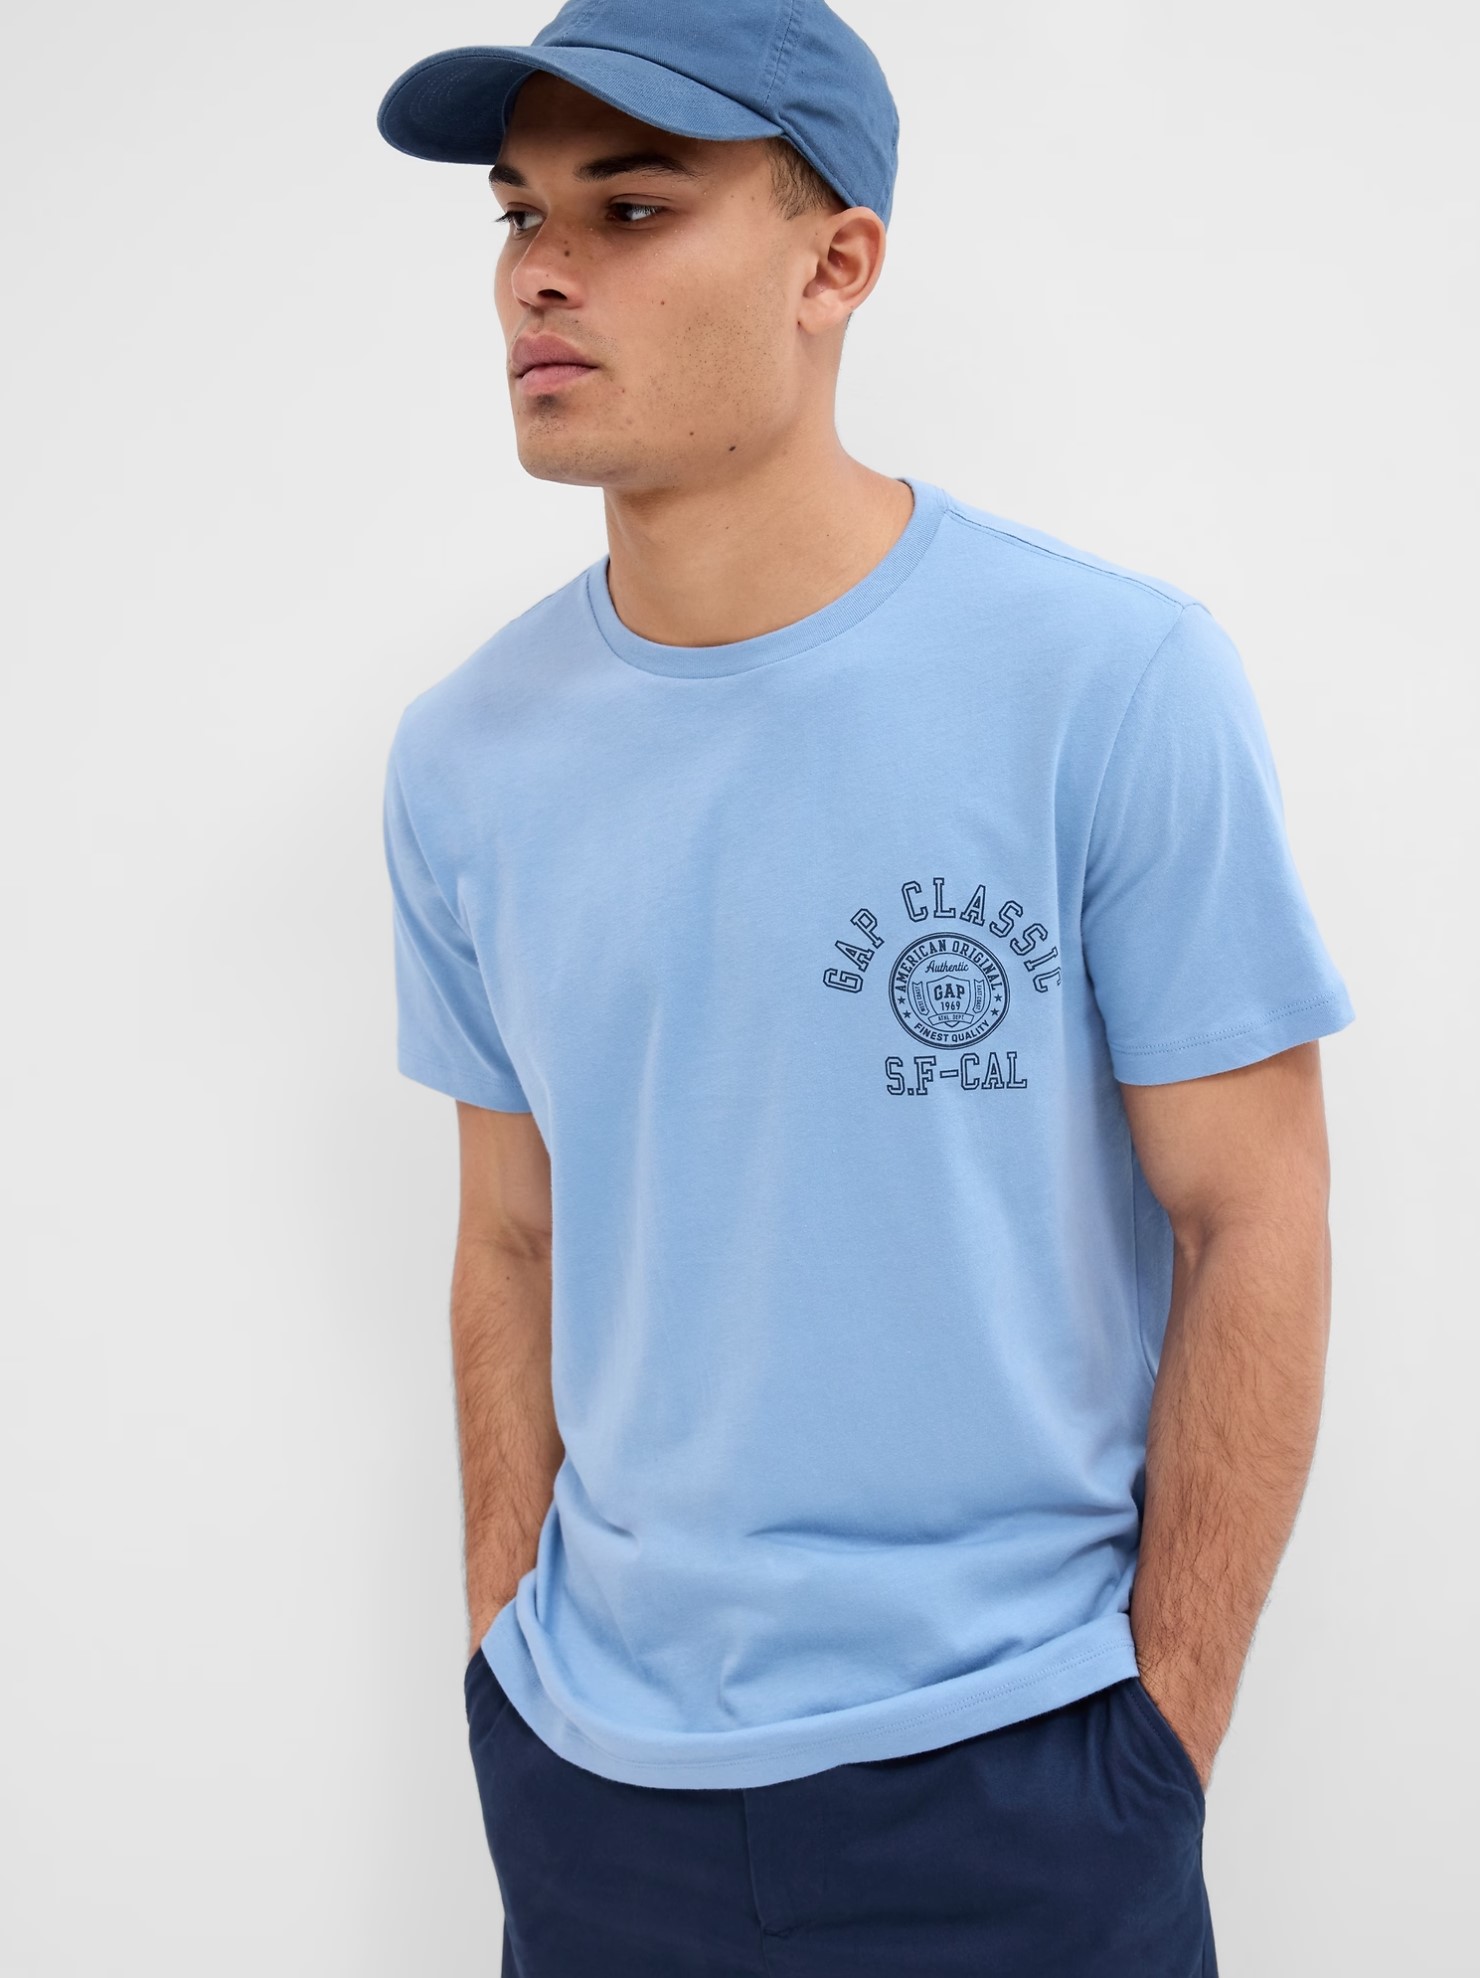 Gap Factory: Men's Gap Graphic T-Shirt $4.5